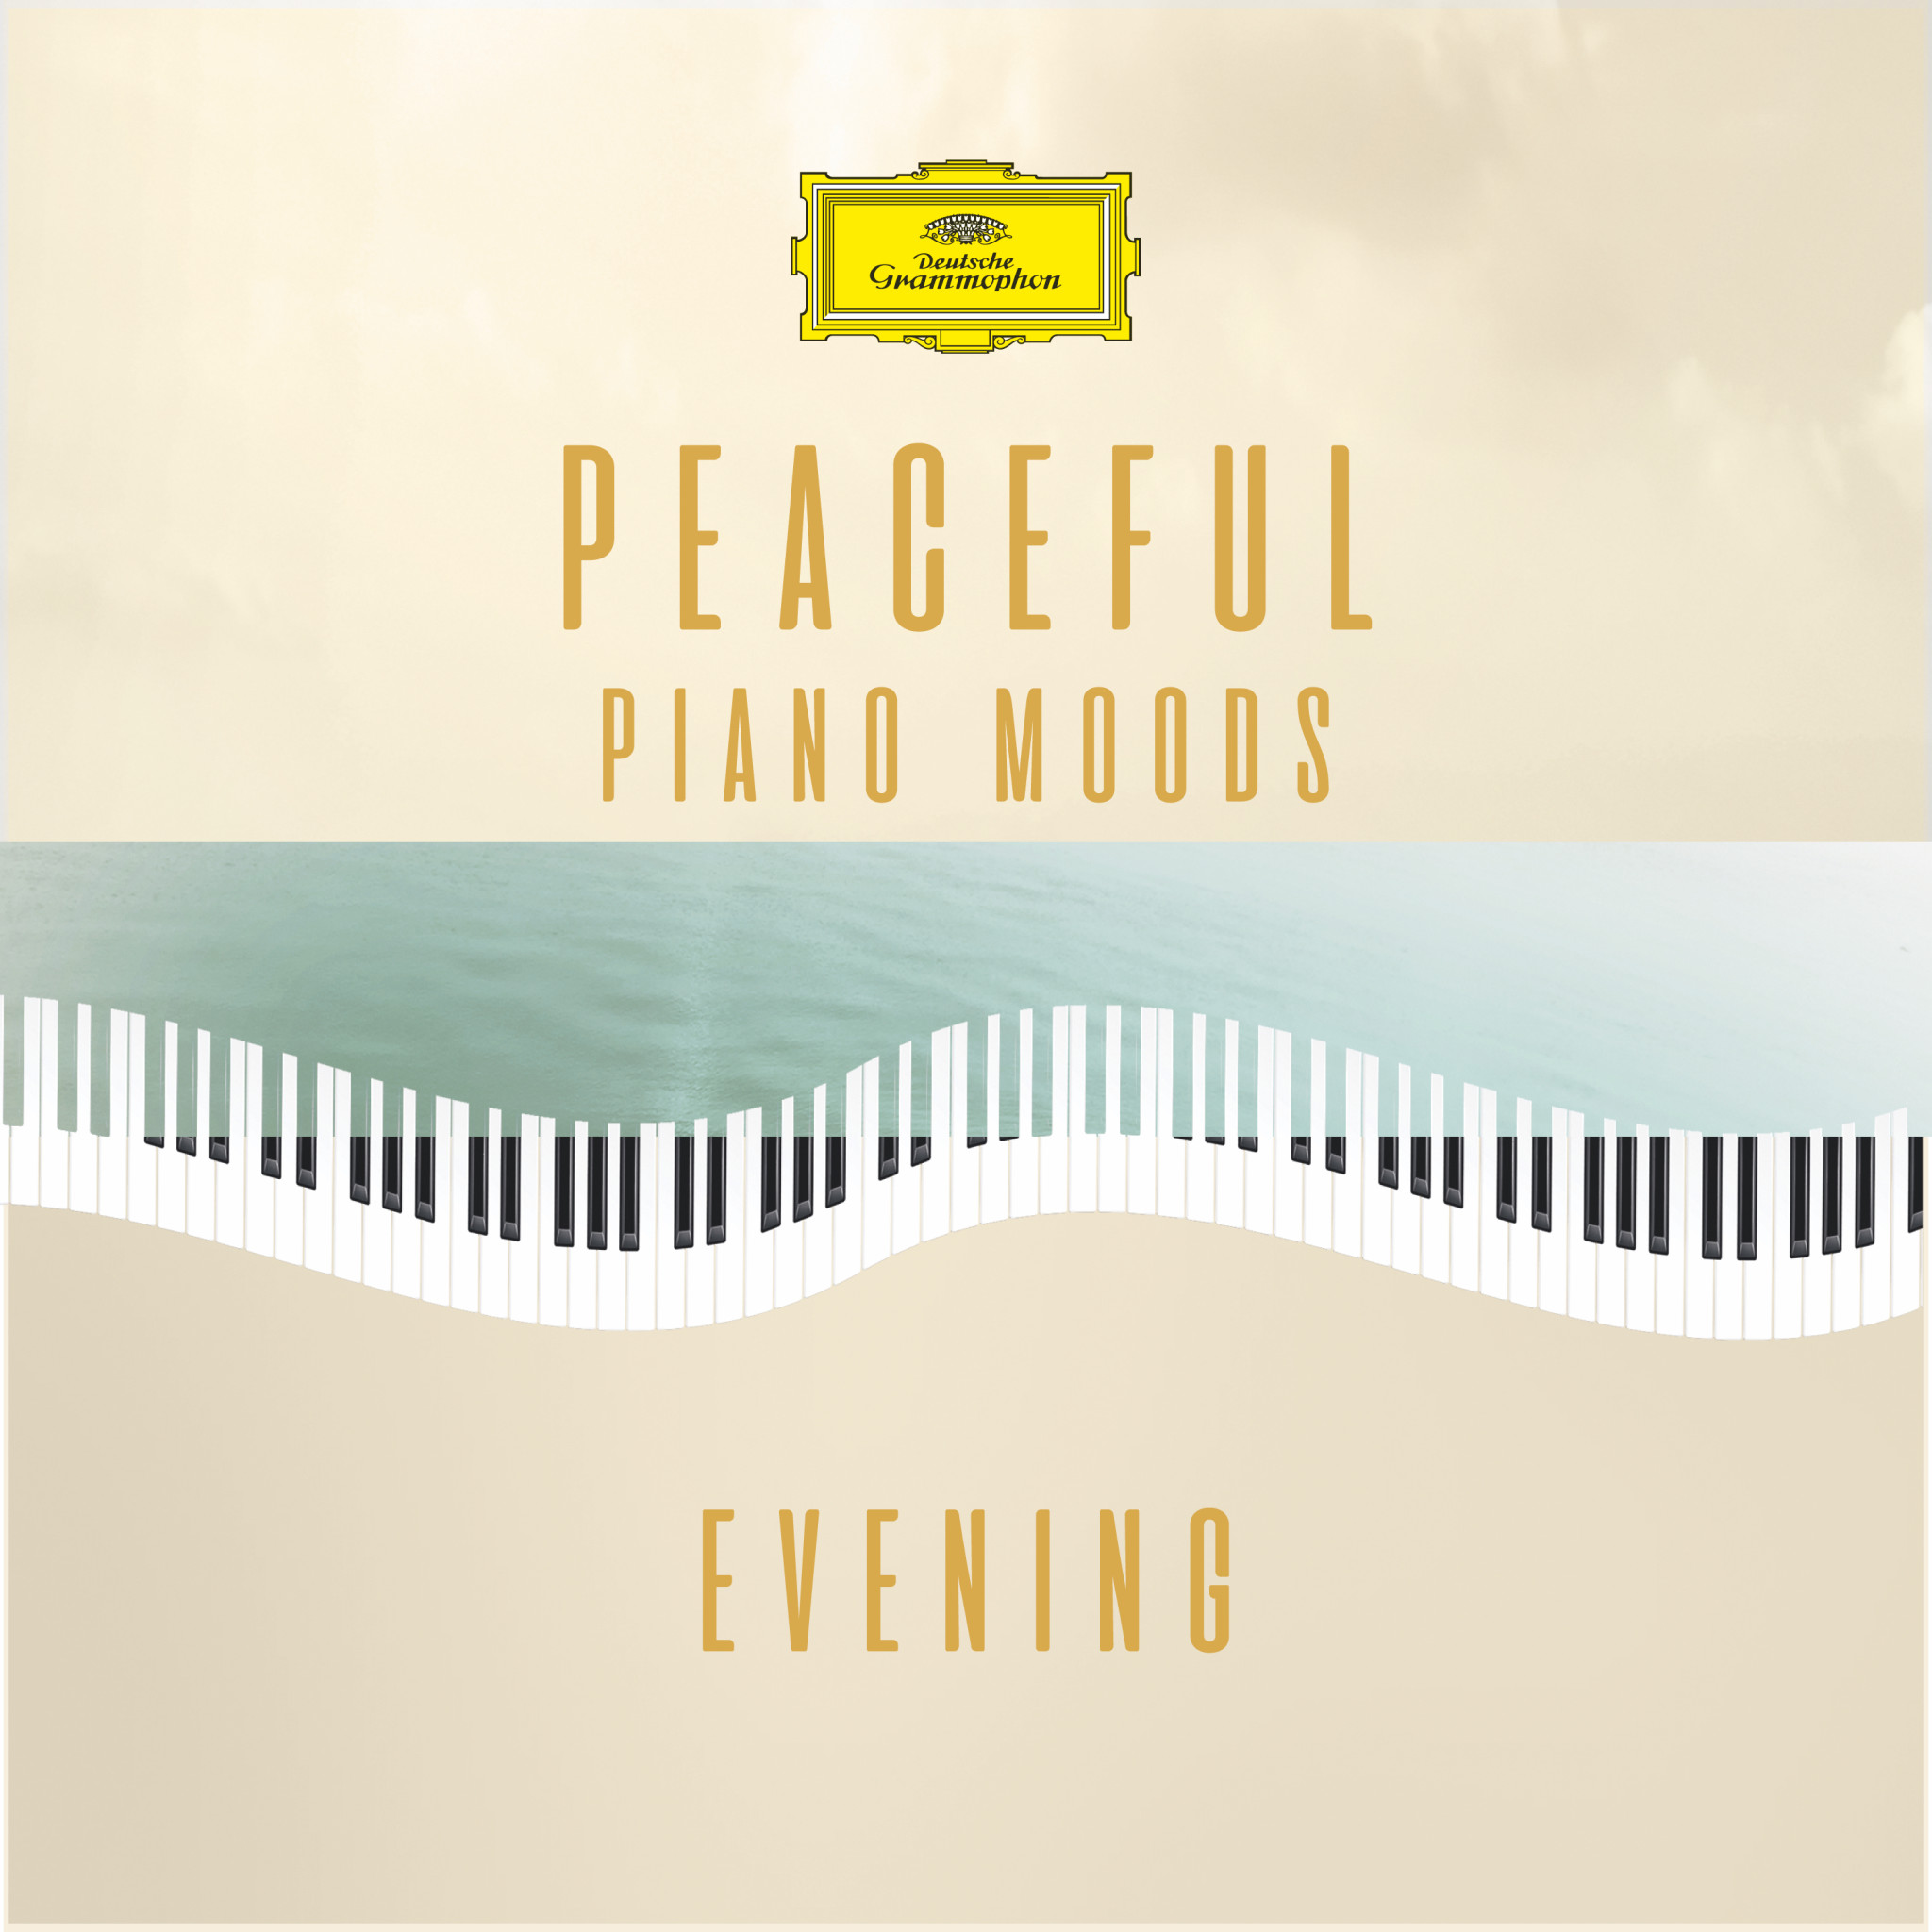 PEACEFUL PIANO MOODS